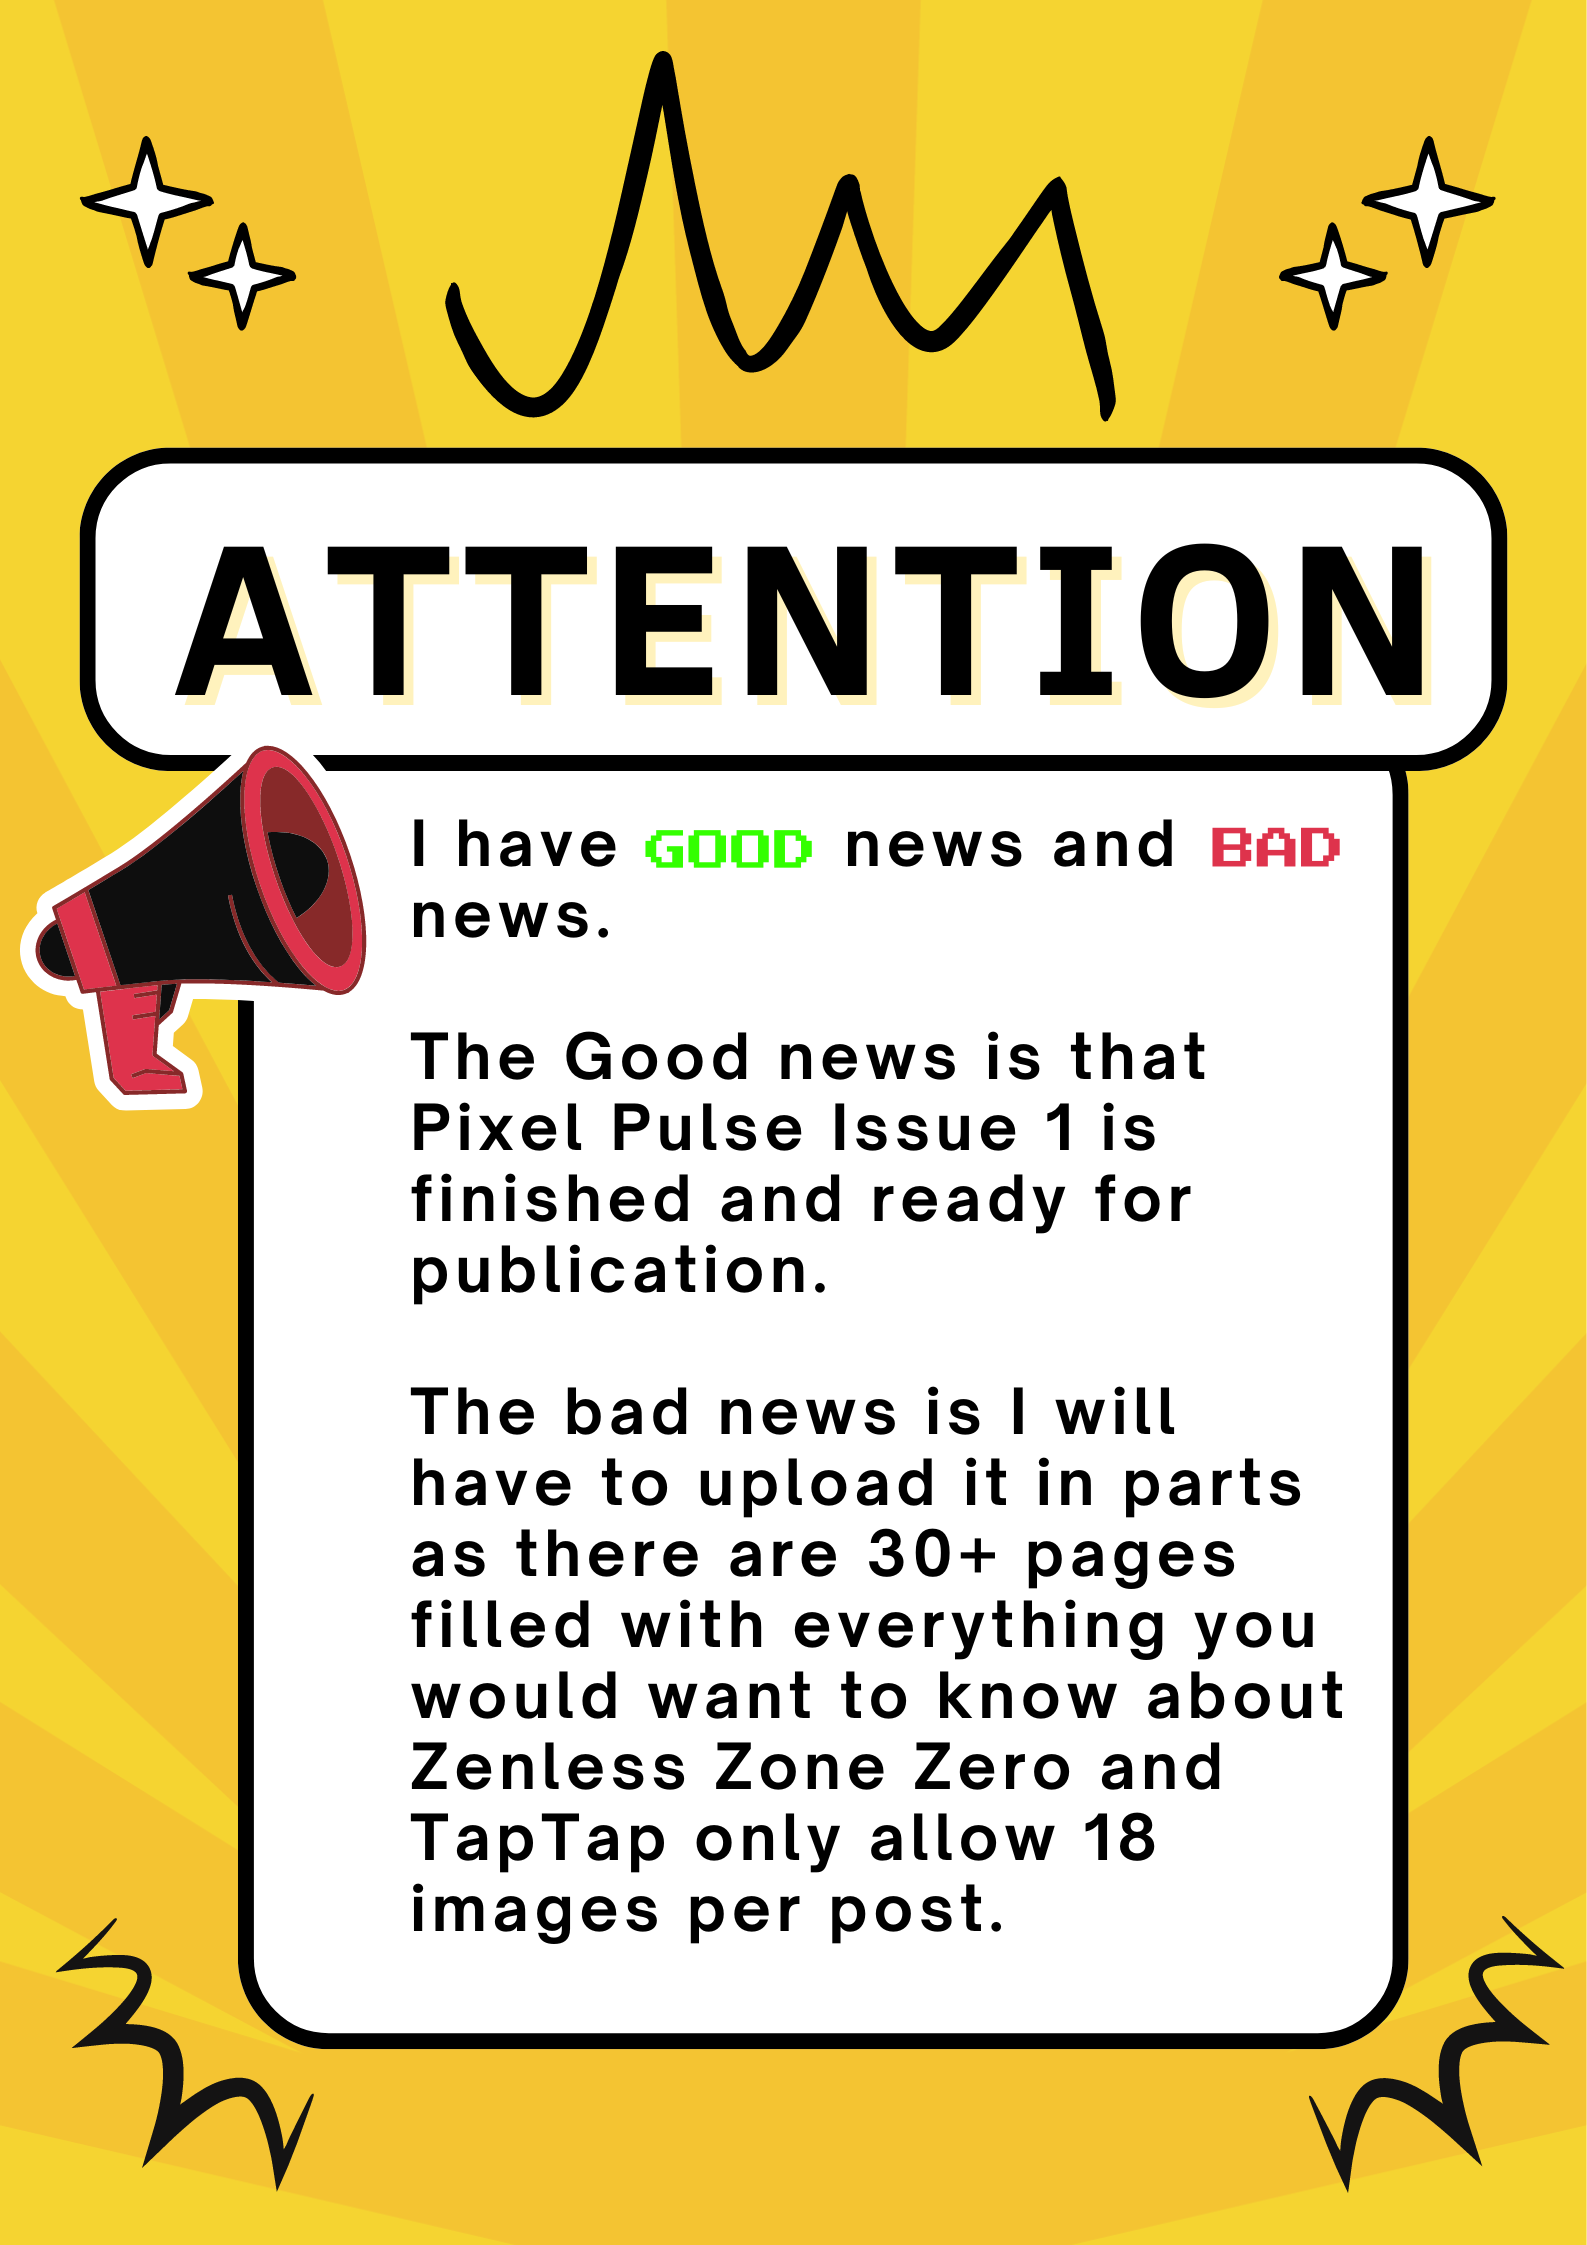 Pixel Pulse Magazine (Zenless Zone Zero Edition): Progress Update